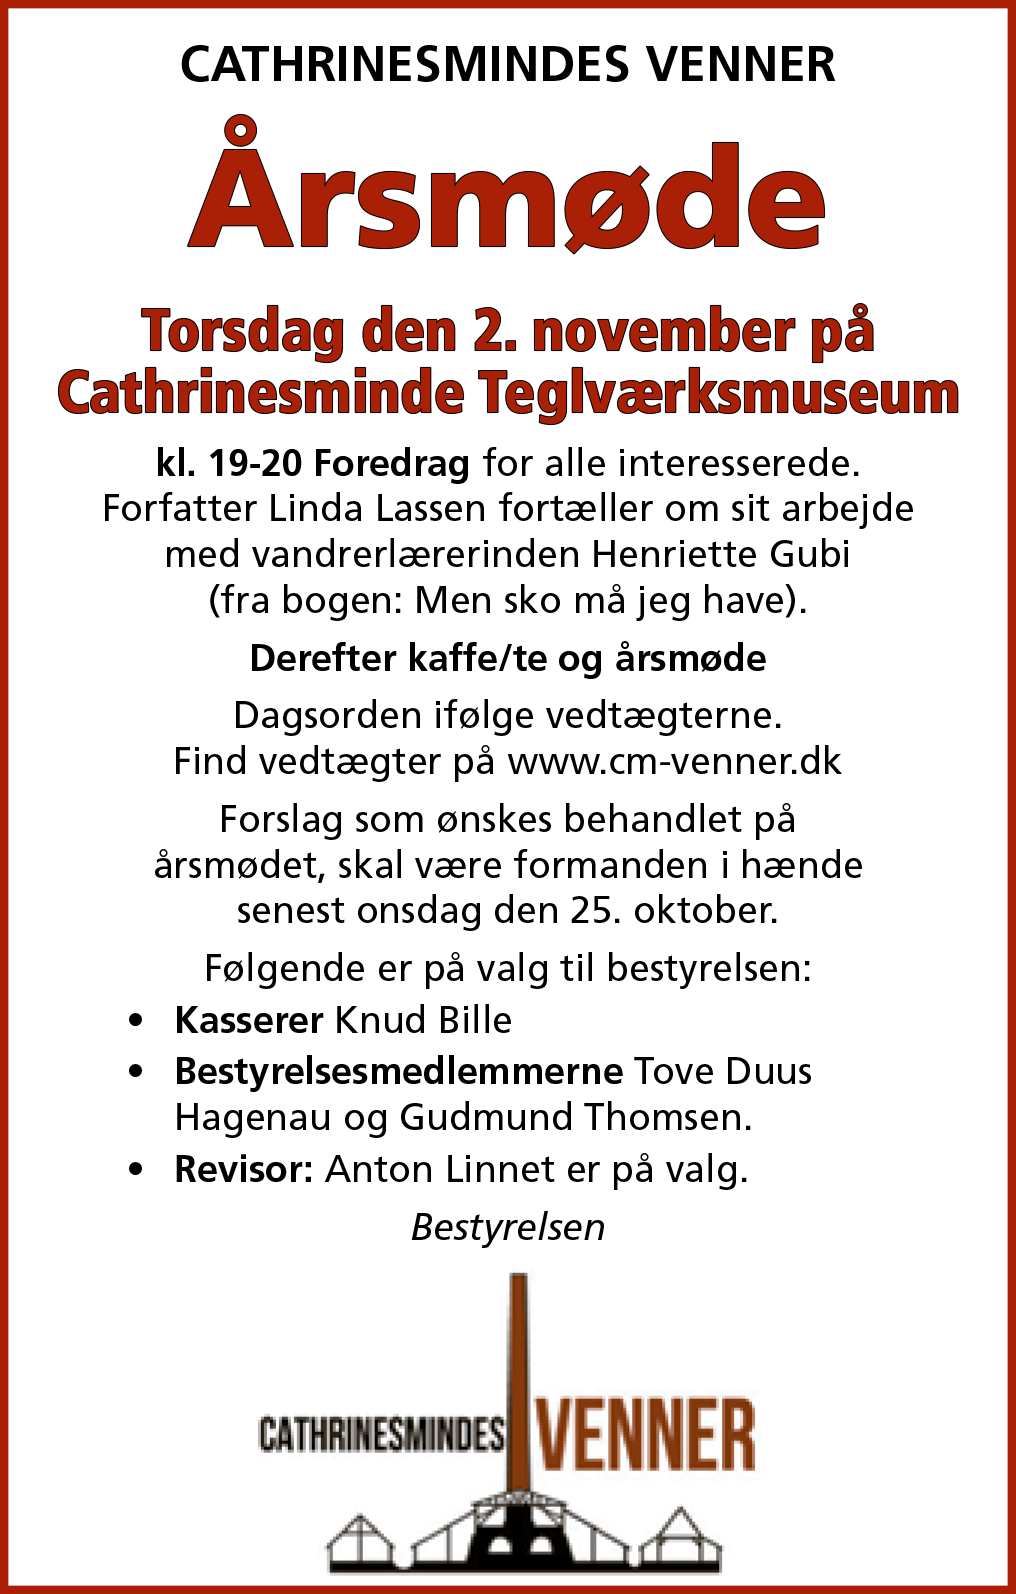 Cathrinesmindes Venner-uge41_23 annonce